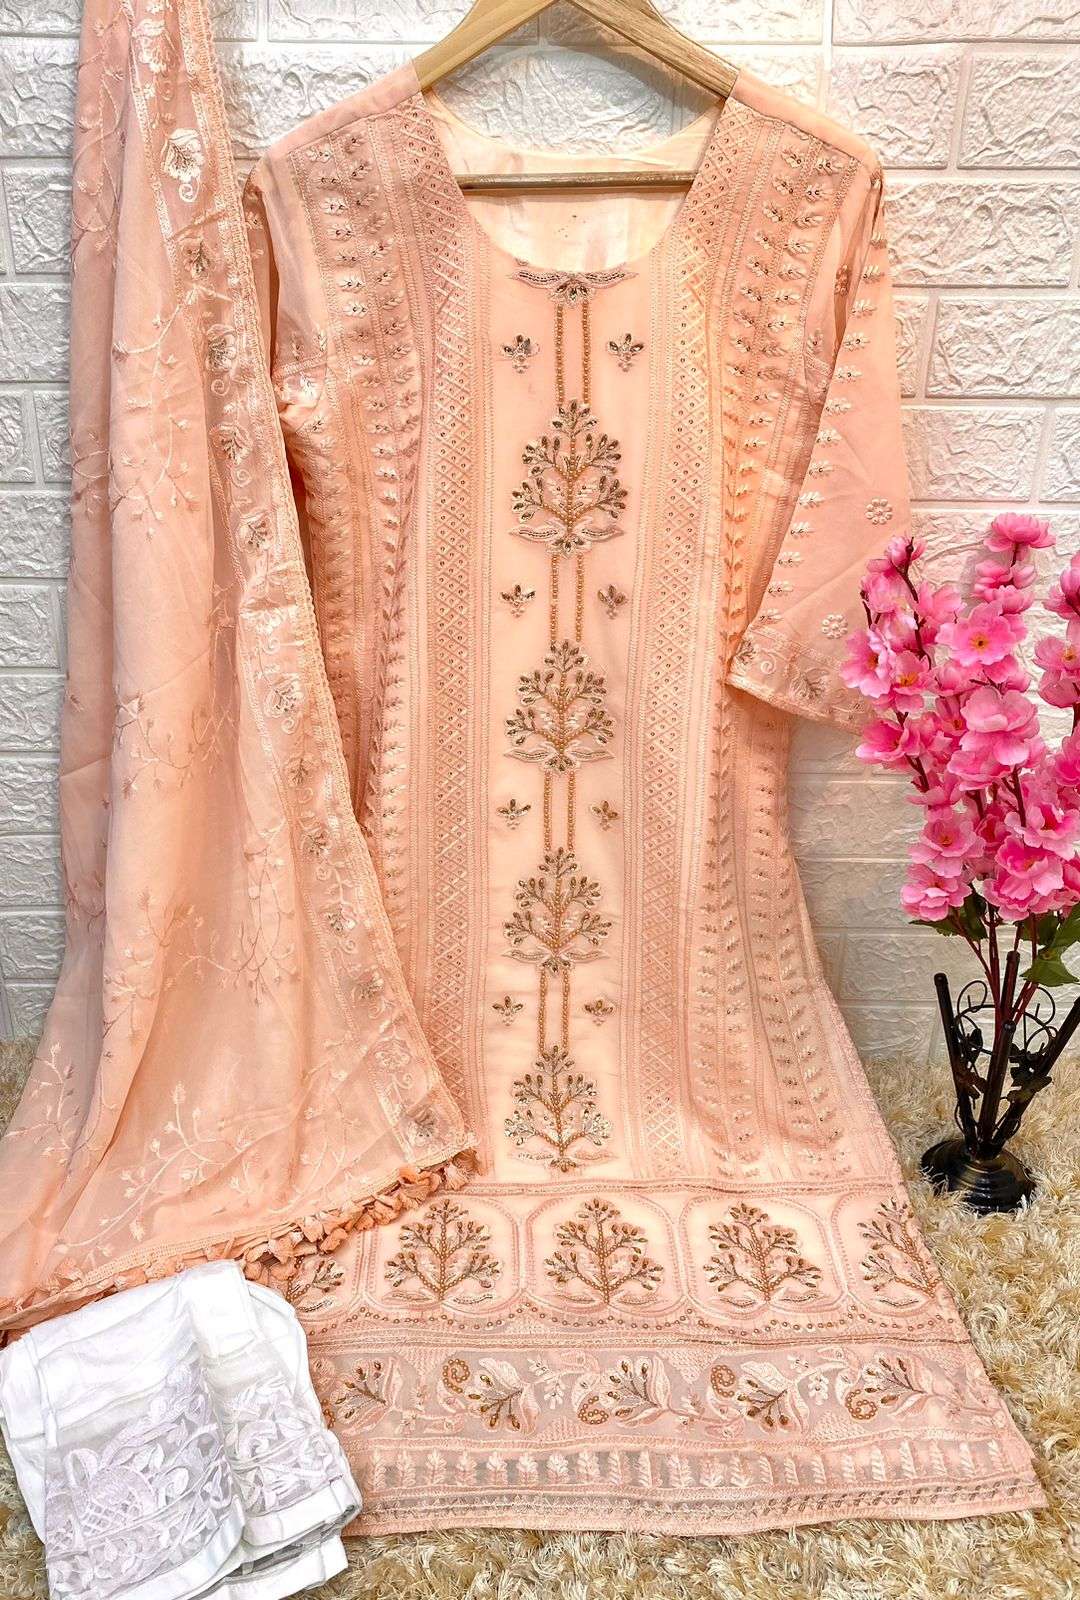 ramsha 1010 colour series georgette ready made pakisatni salwar suits online best price surat wholesaler